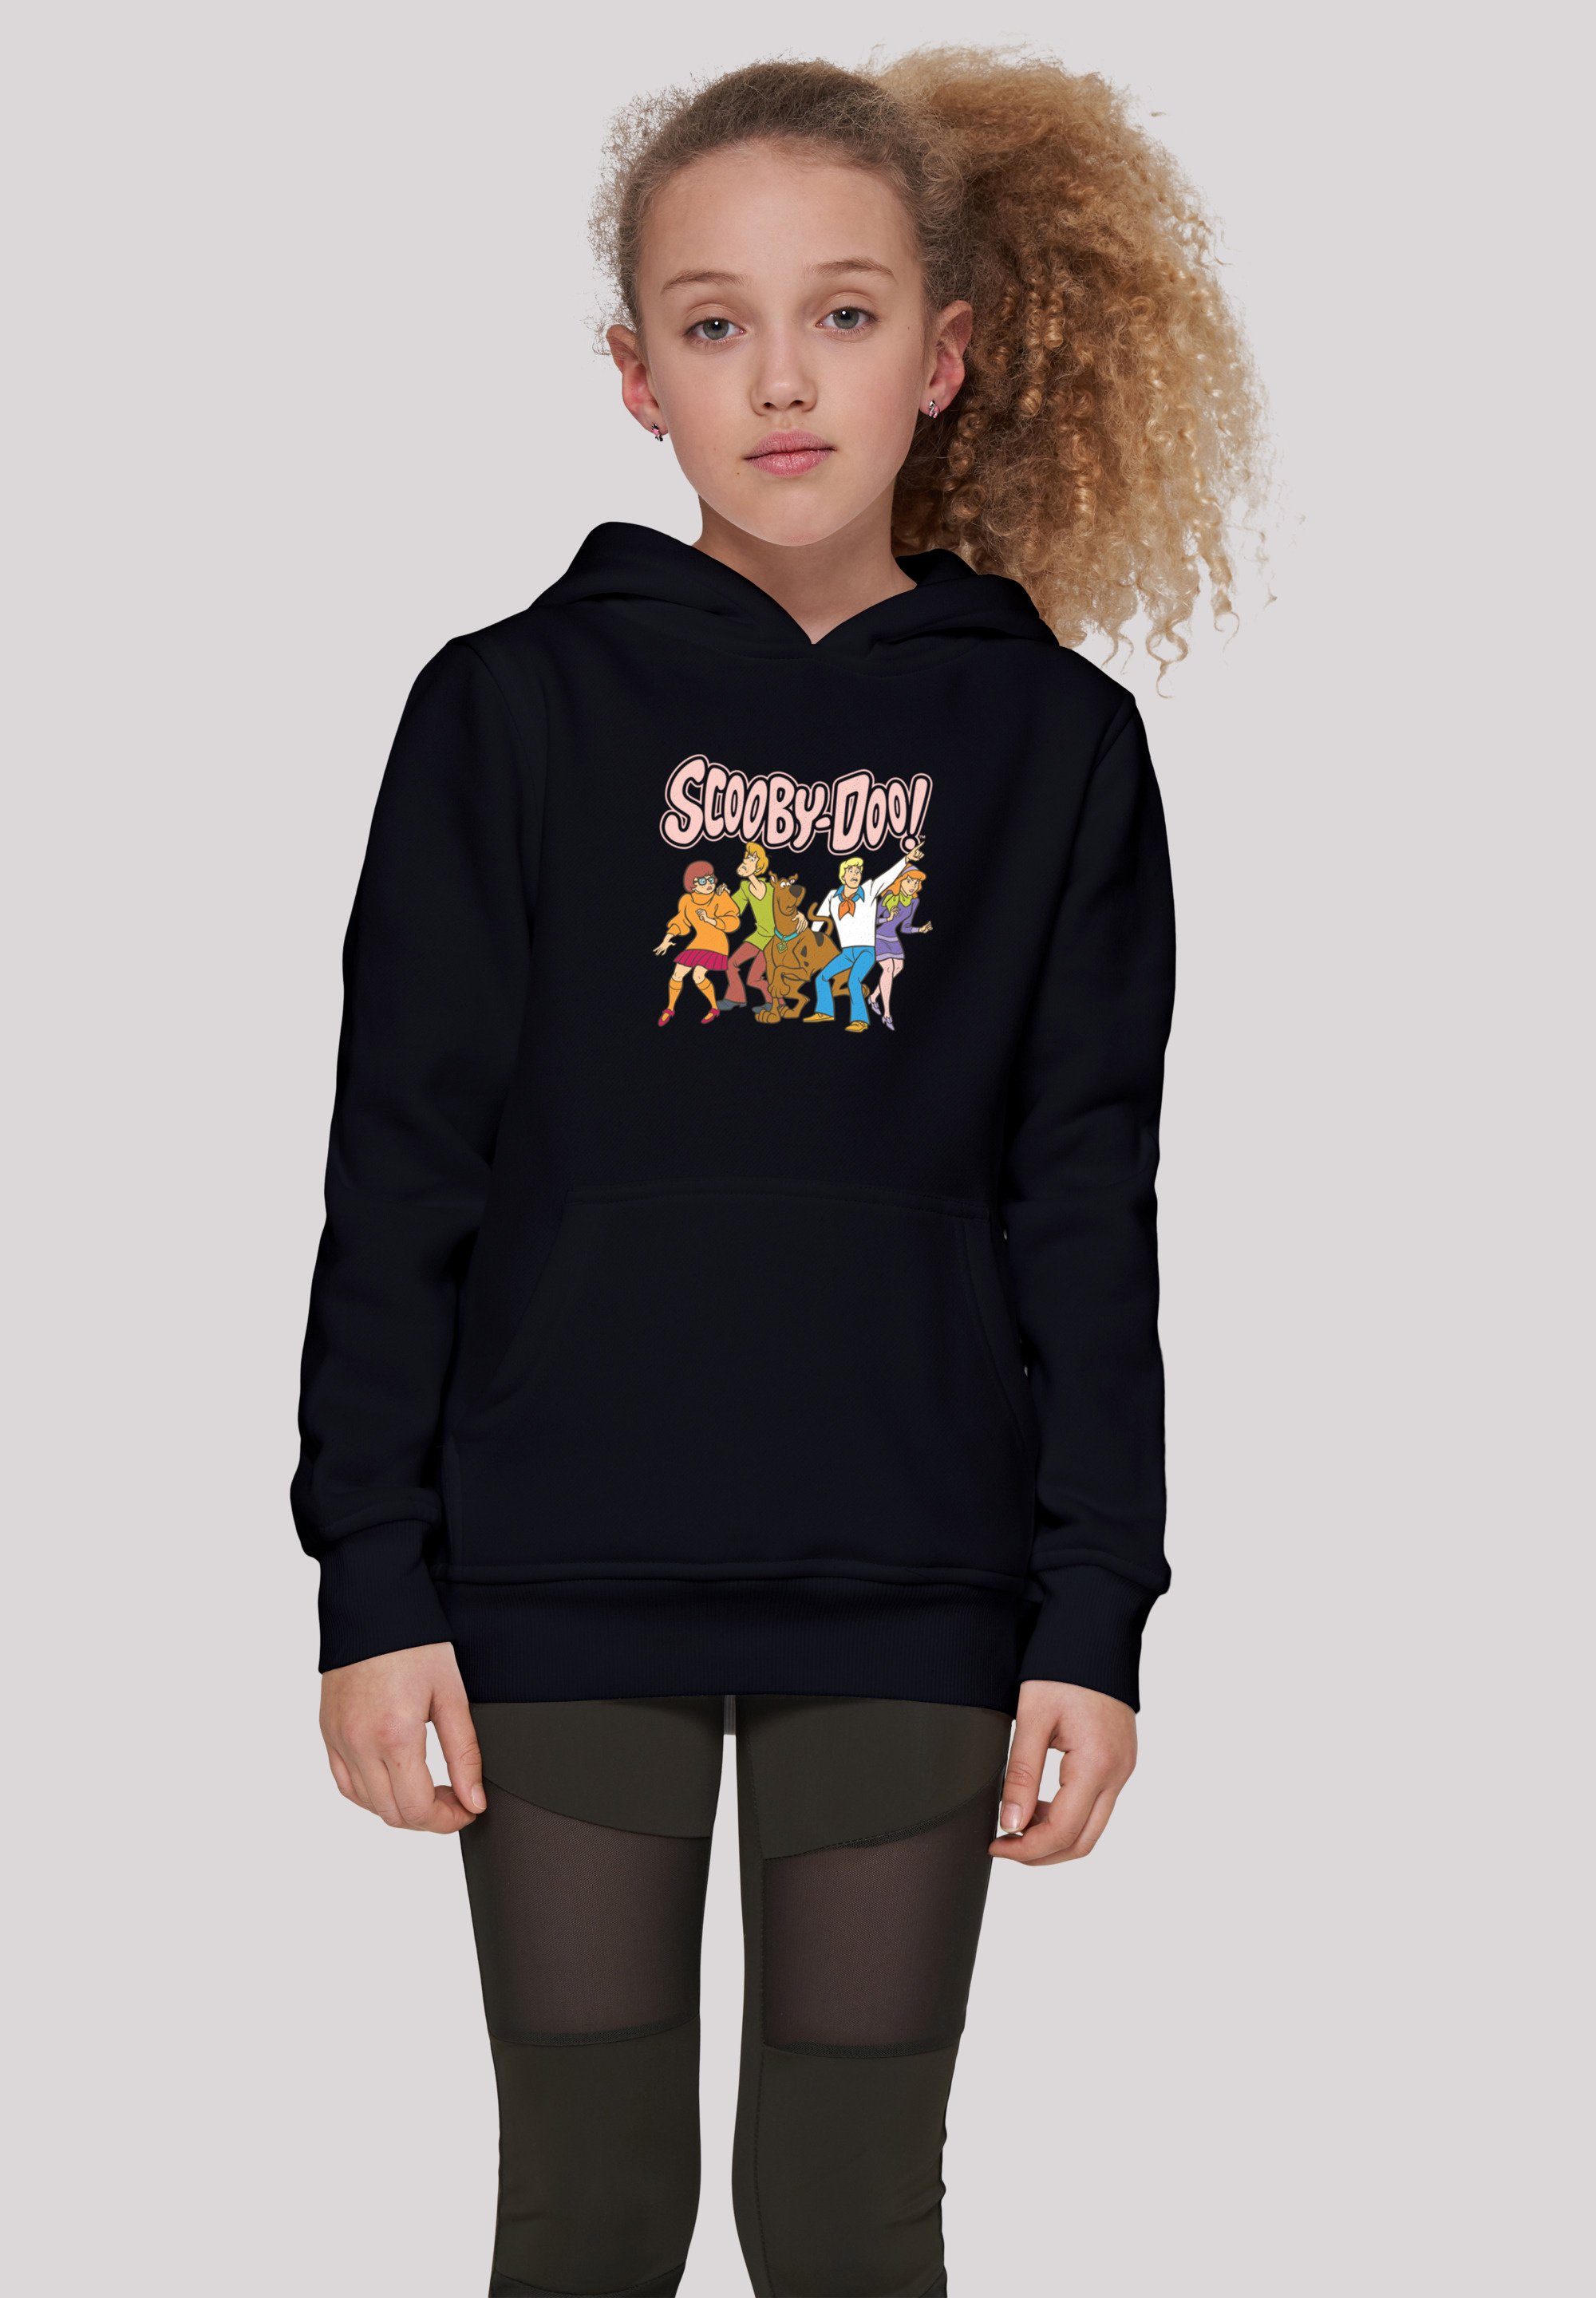 F4NT4STIC Sweatshirt Scooby Doo Classic Group Unisex Kinder,Premium Merch,Jungen,Mädchen,Bedruckt schwarz